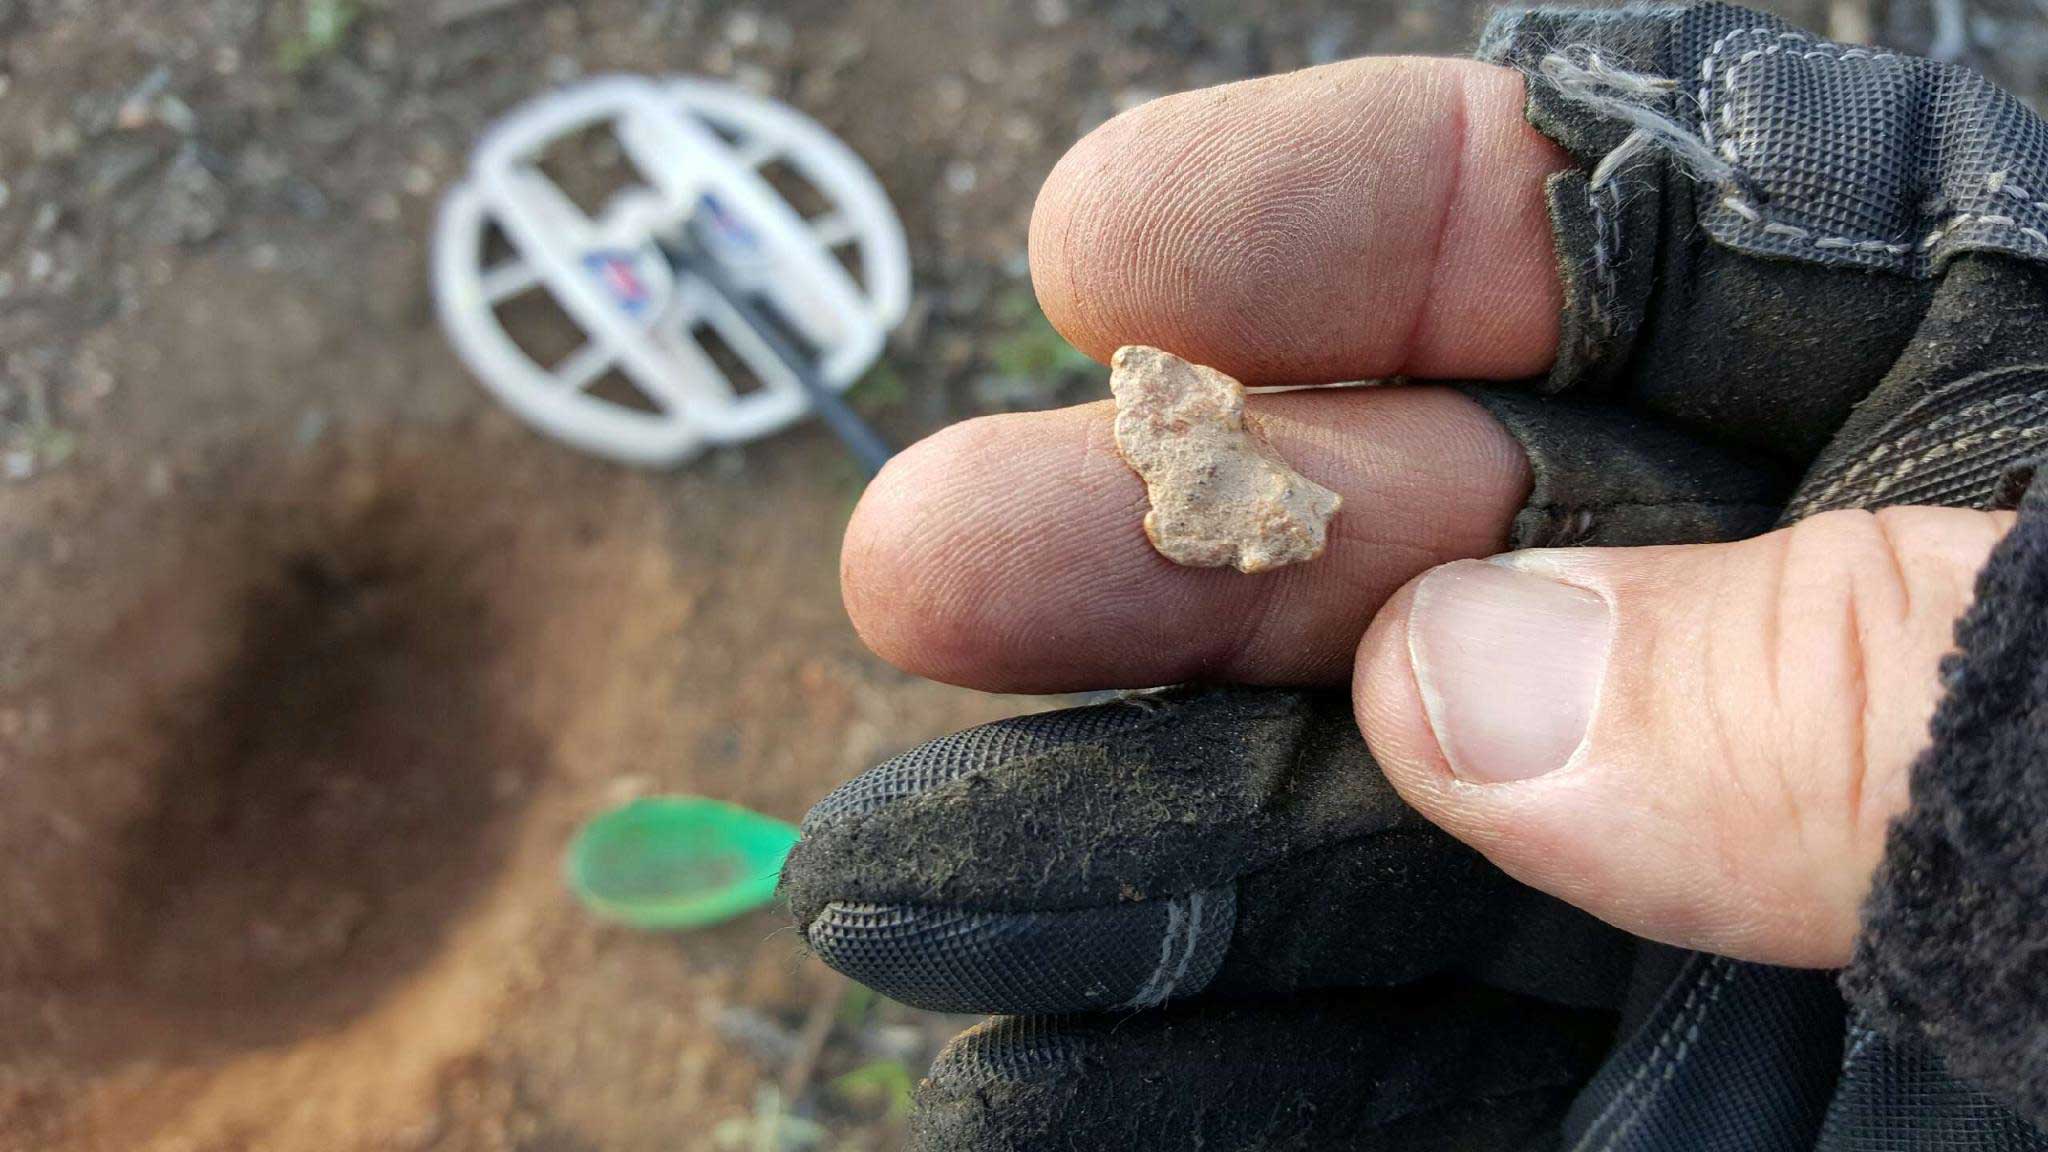 GPZ 19 Coil finds